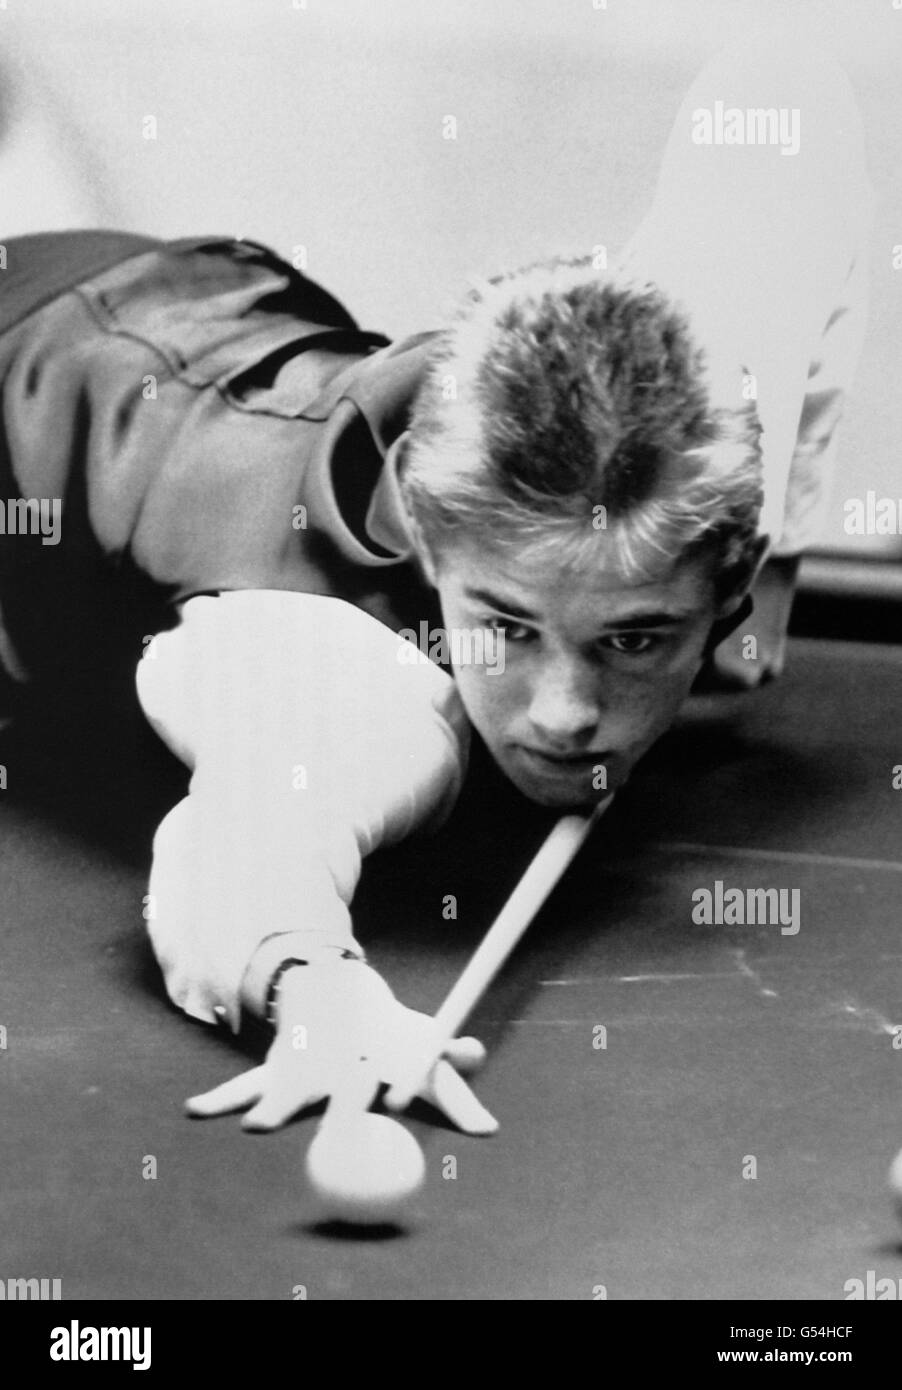 Snooker - 1988 World Snooker Championship - Second Round - Jimmy White v Stephen Hendry - Crucible Theatre, Sheffield Stock Photo